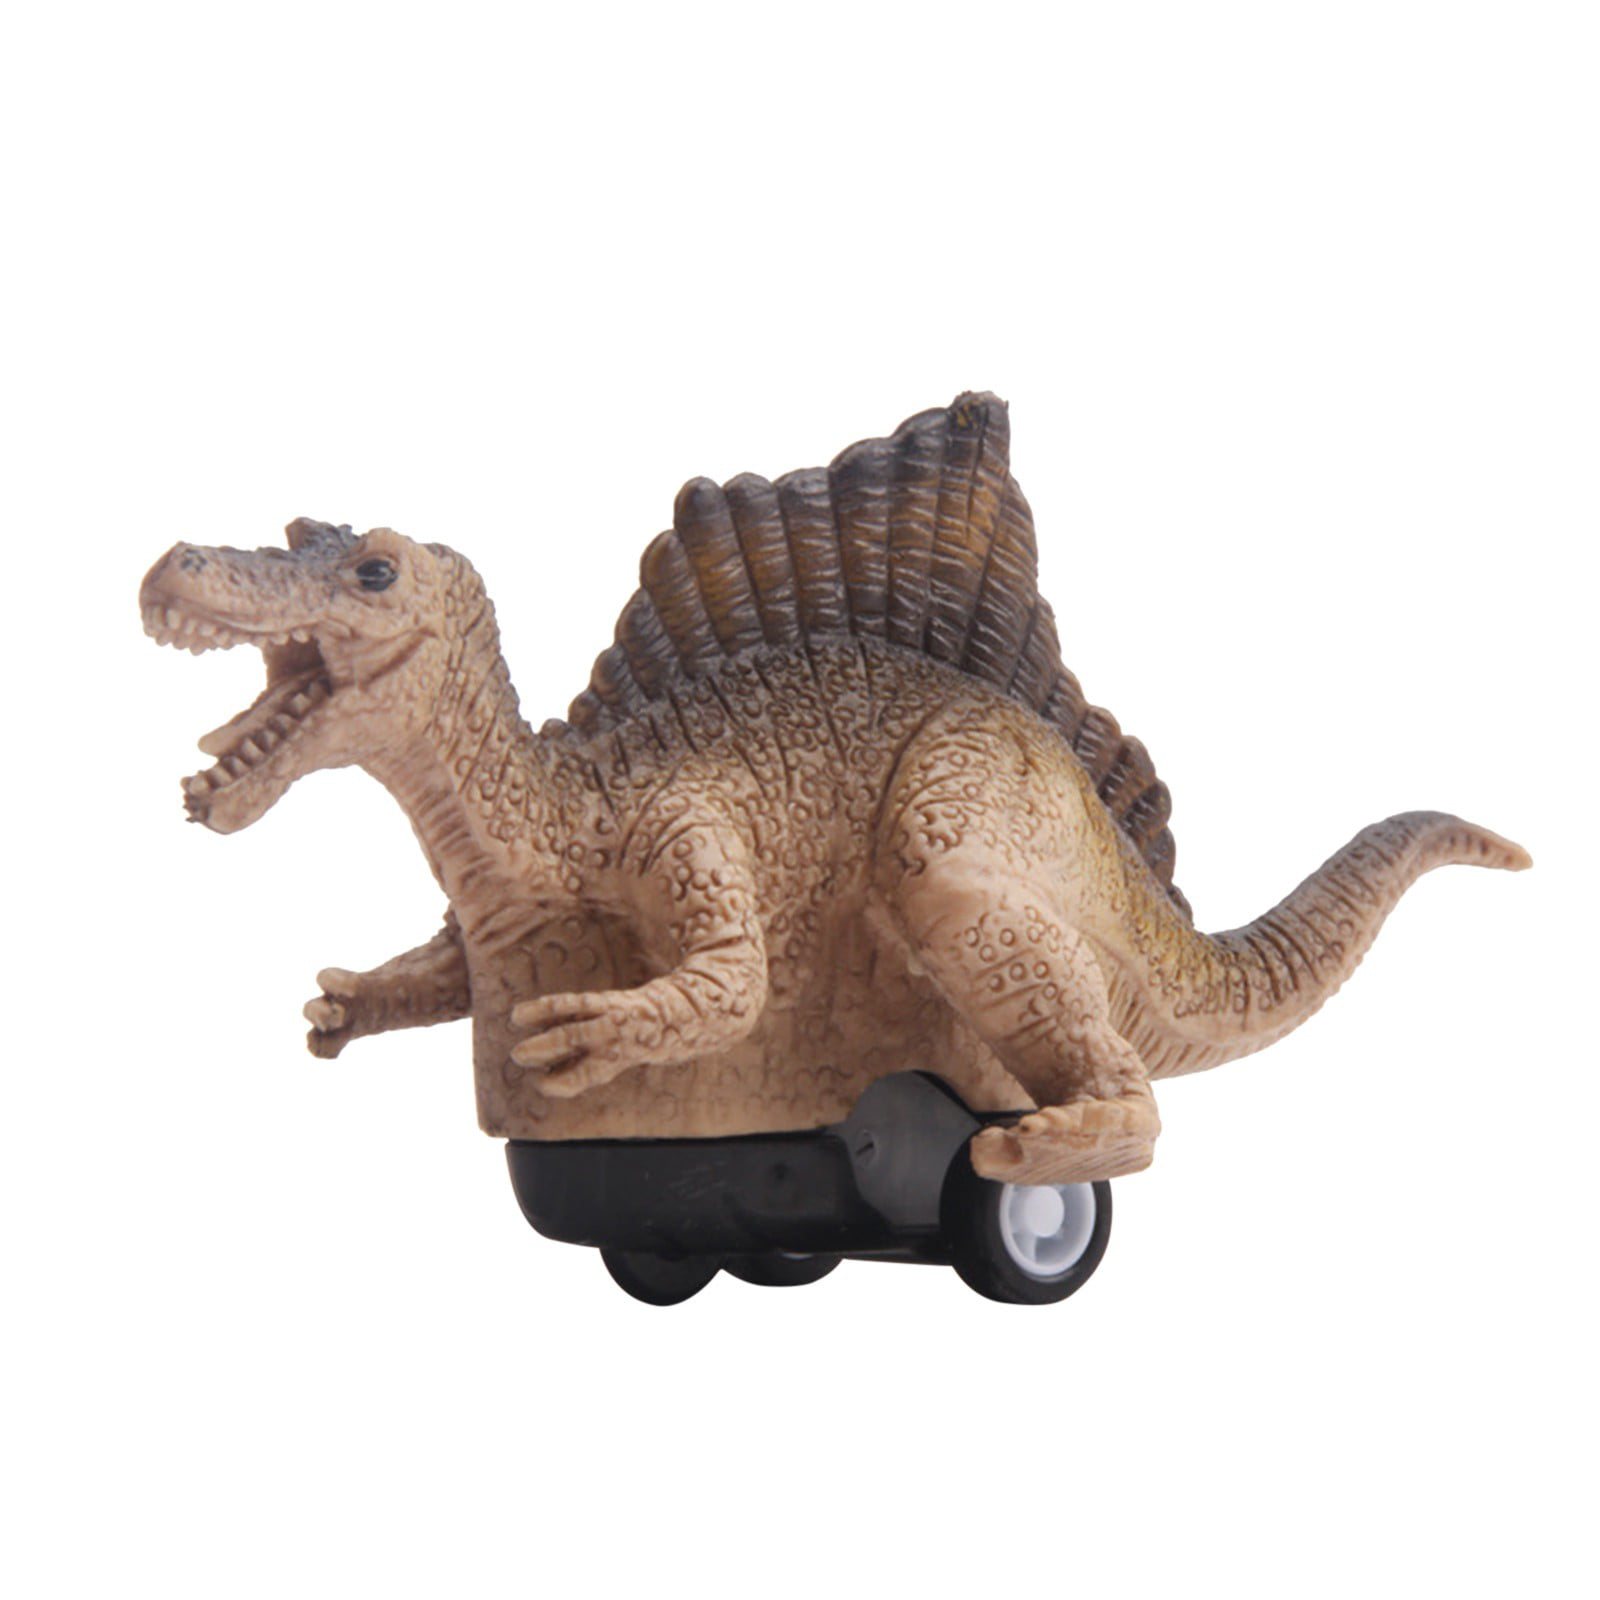 Details about   Dinosaur Egg Toy Children's Action Stegosaurus From Jurassic Park 